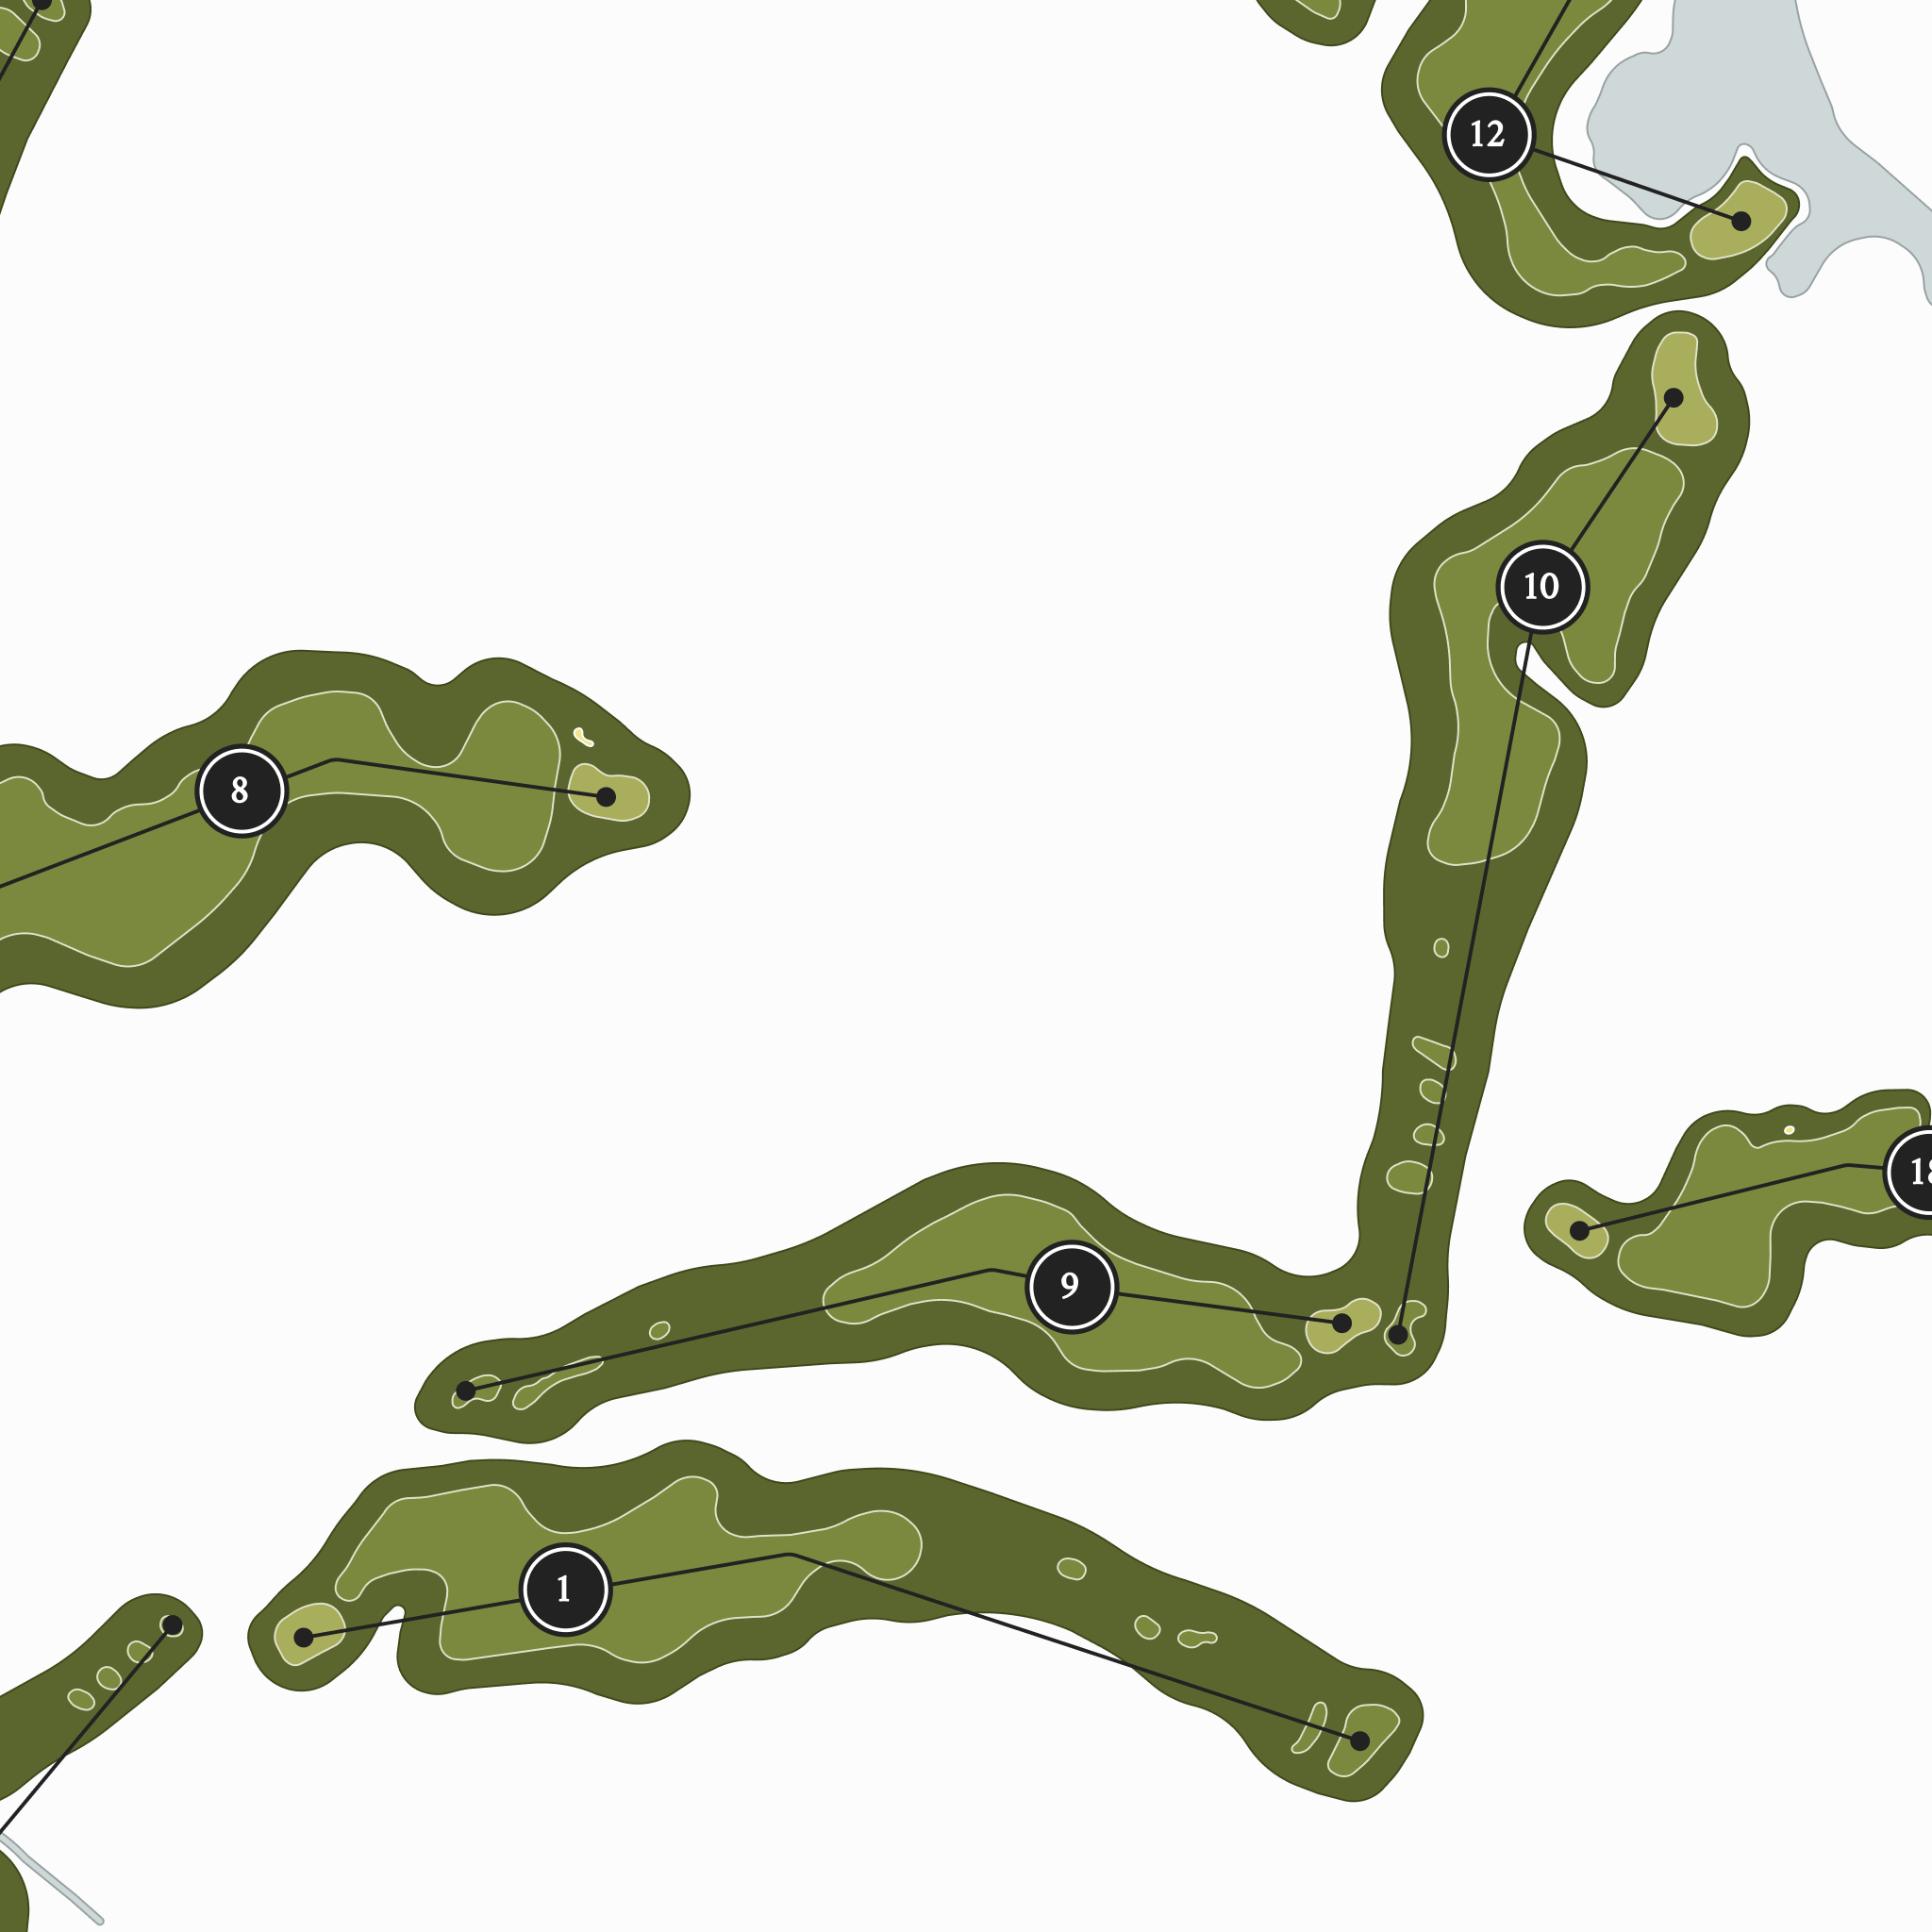 Tot Hill Farm Golf Club | Golf Course Map | Close Up